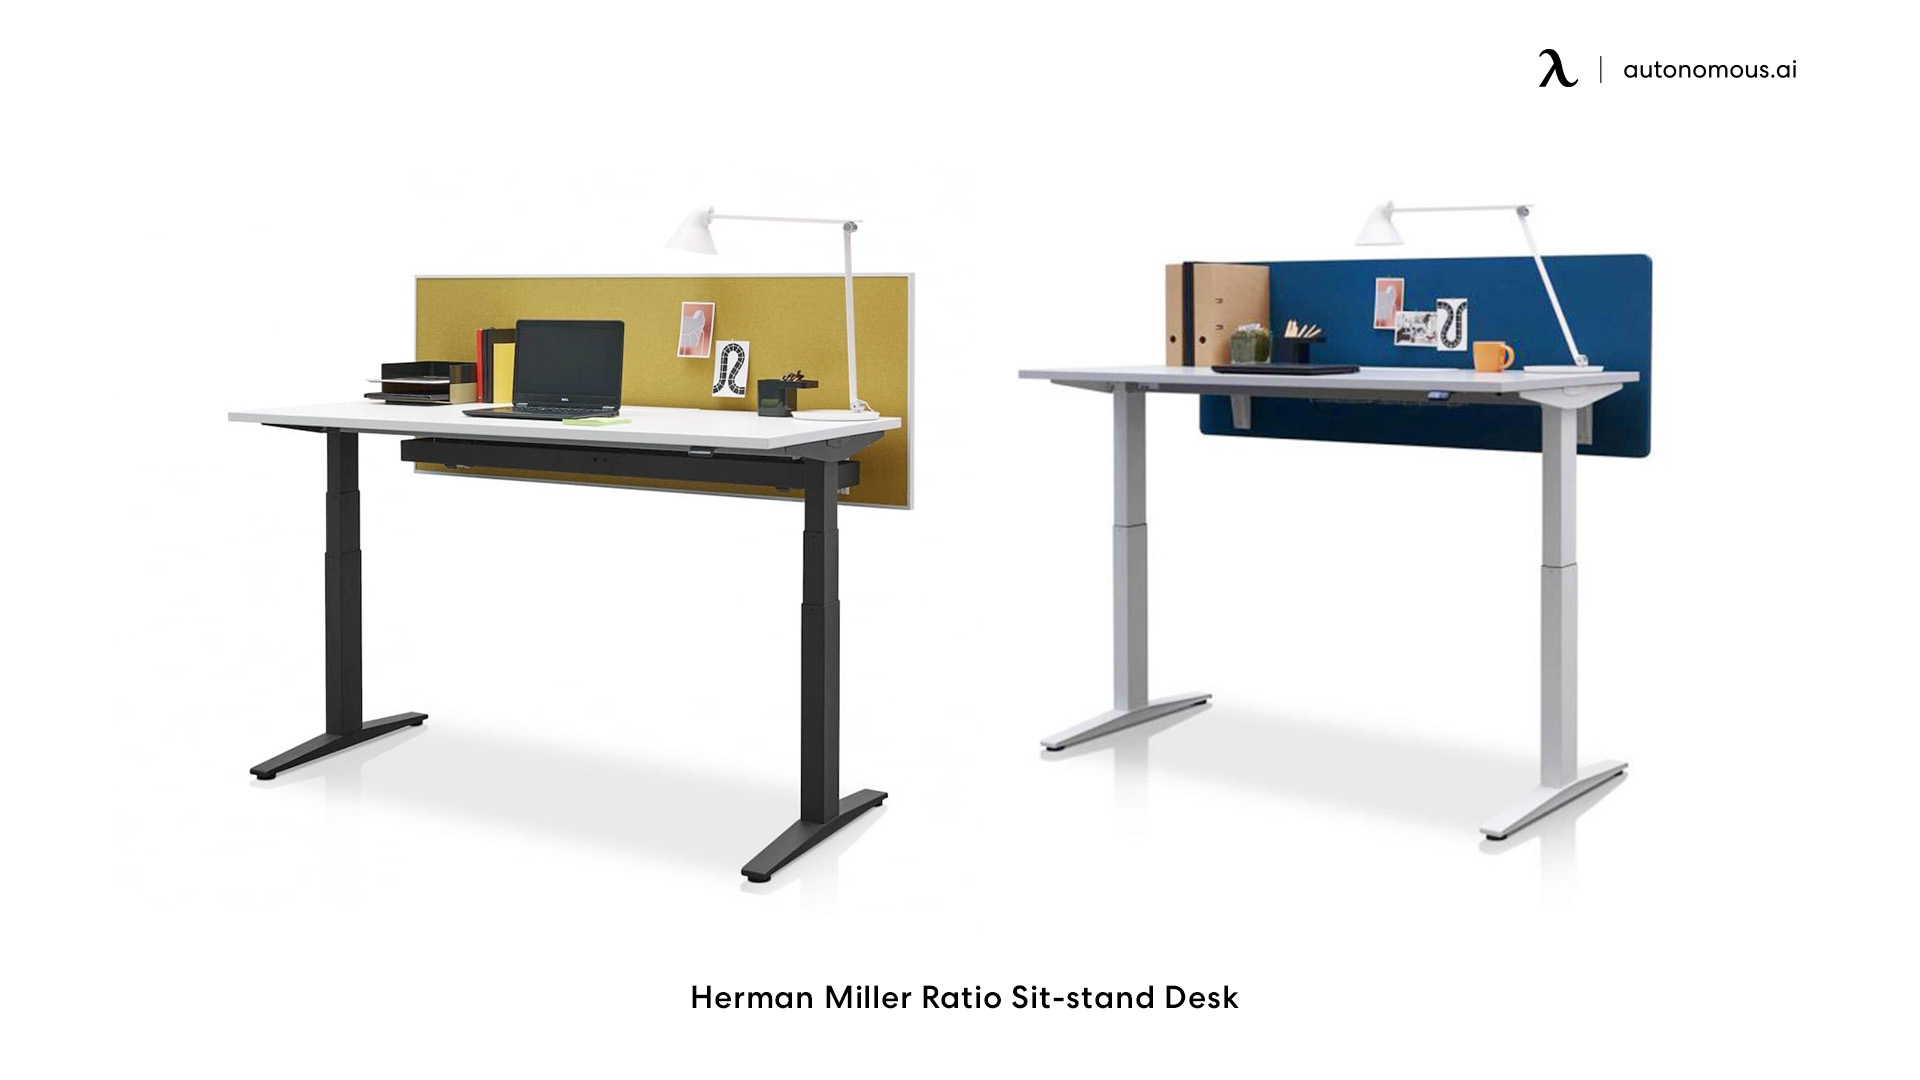 Ratio ergonomic adjustable desk by Herman Miller